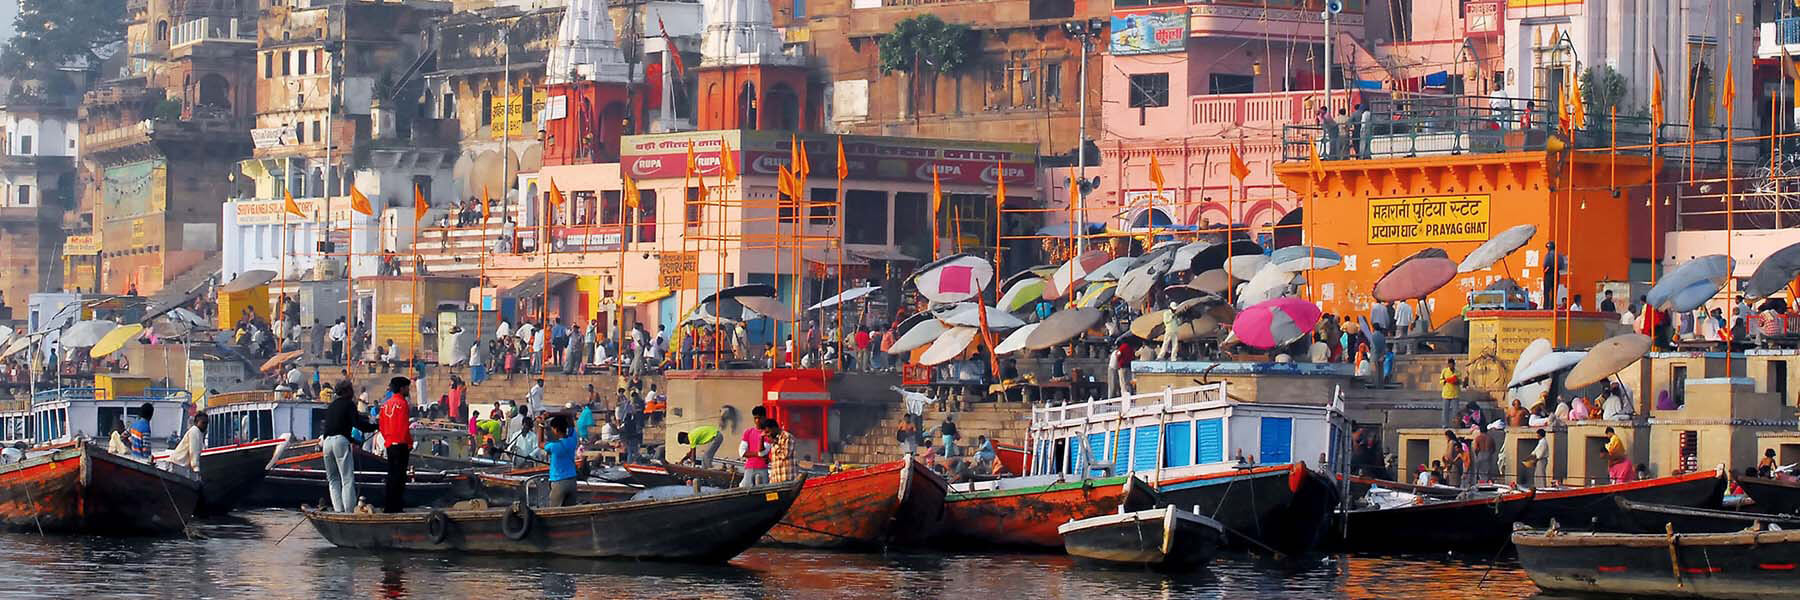 People on boats and docks in Varanasi, India